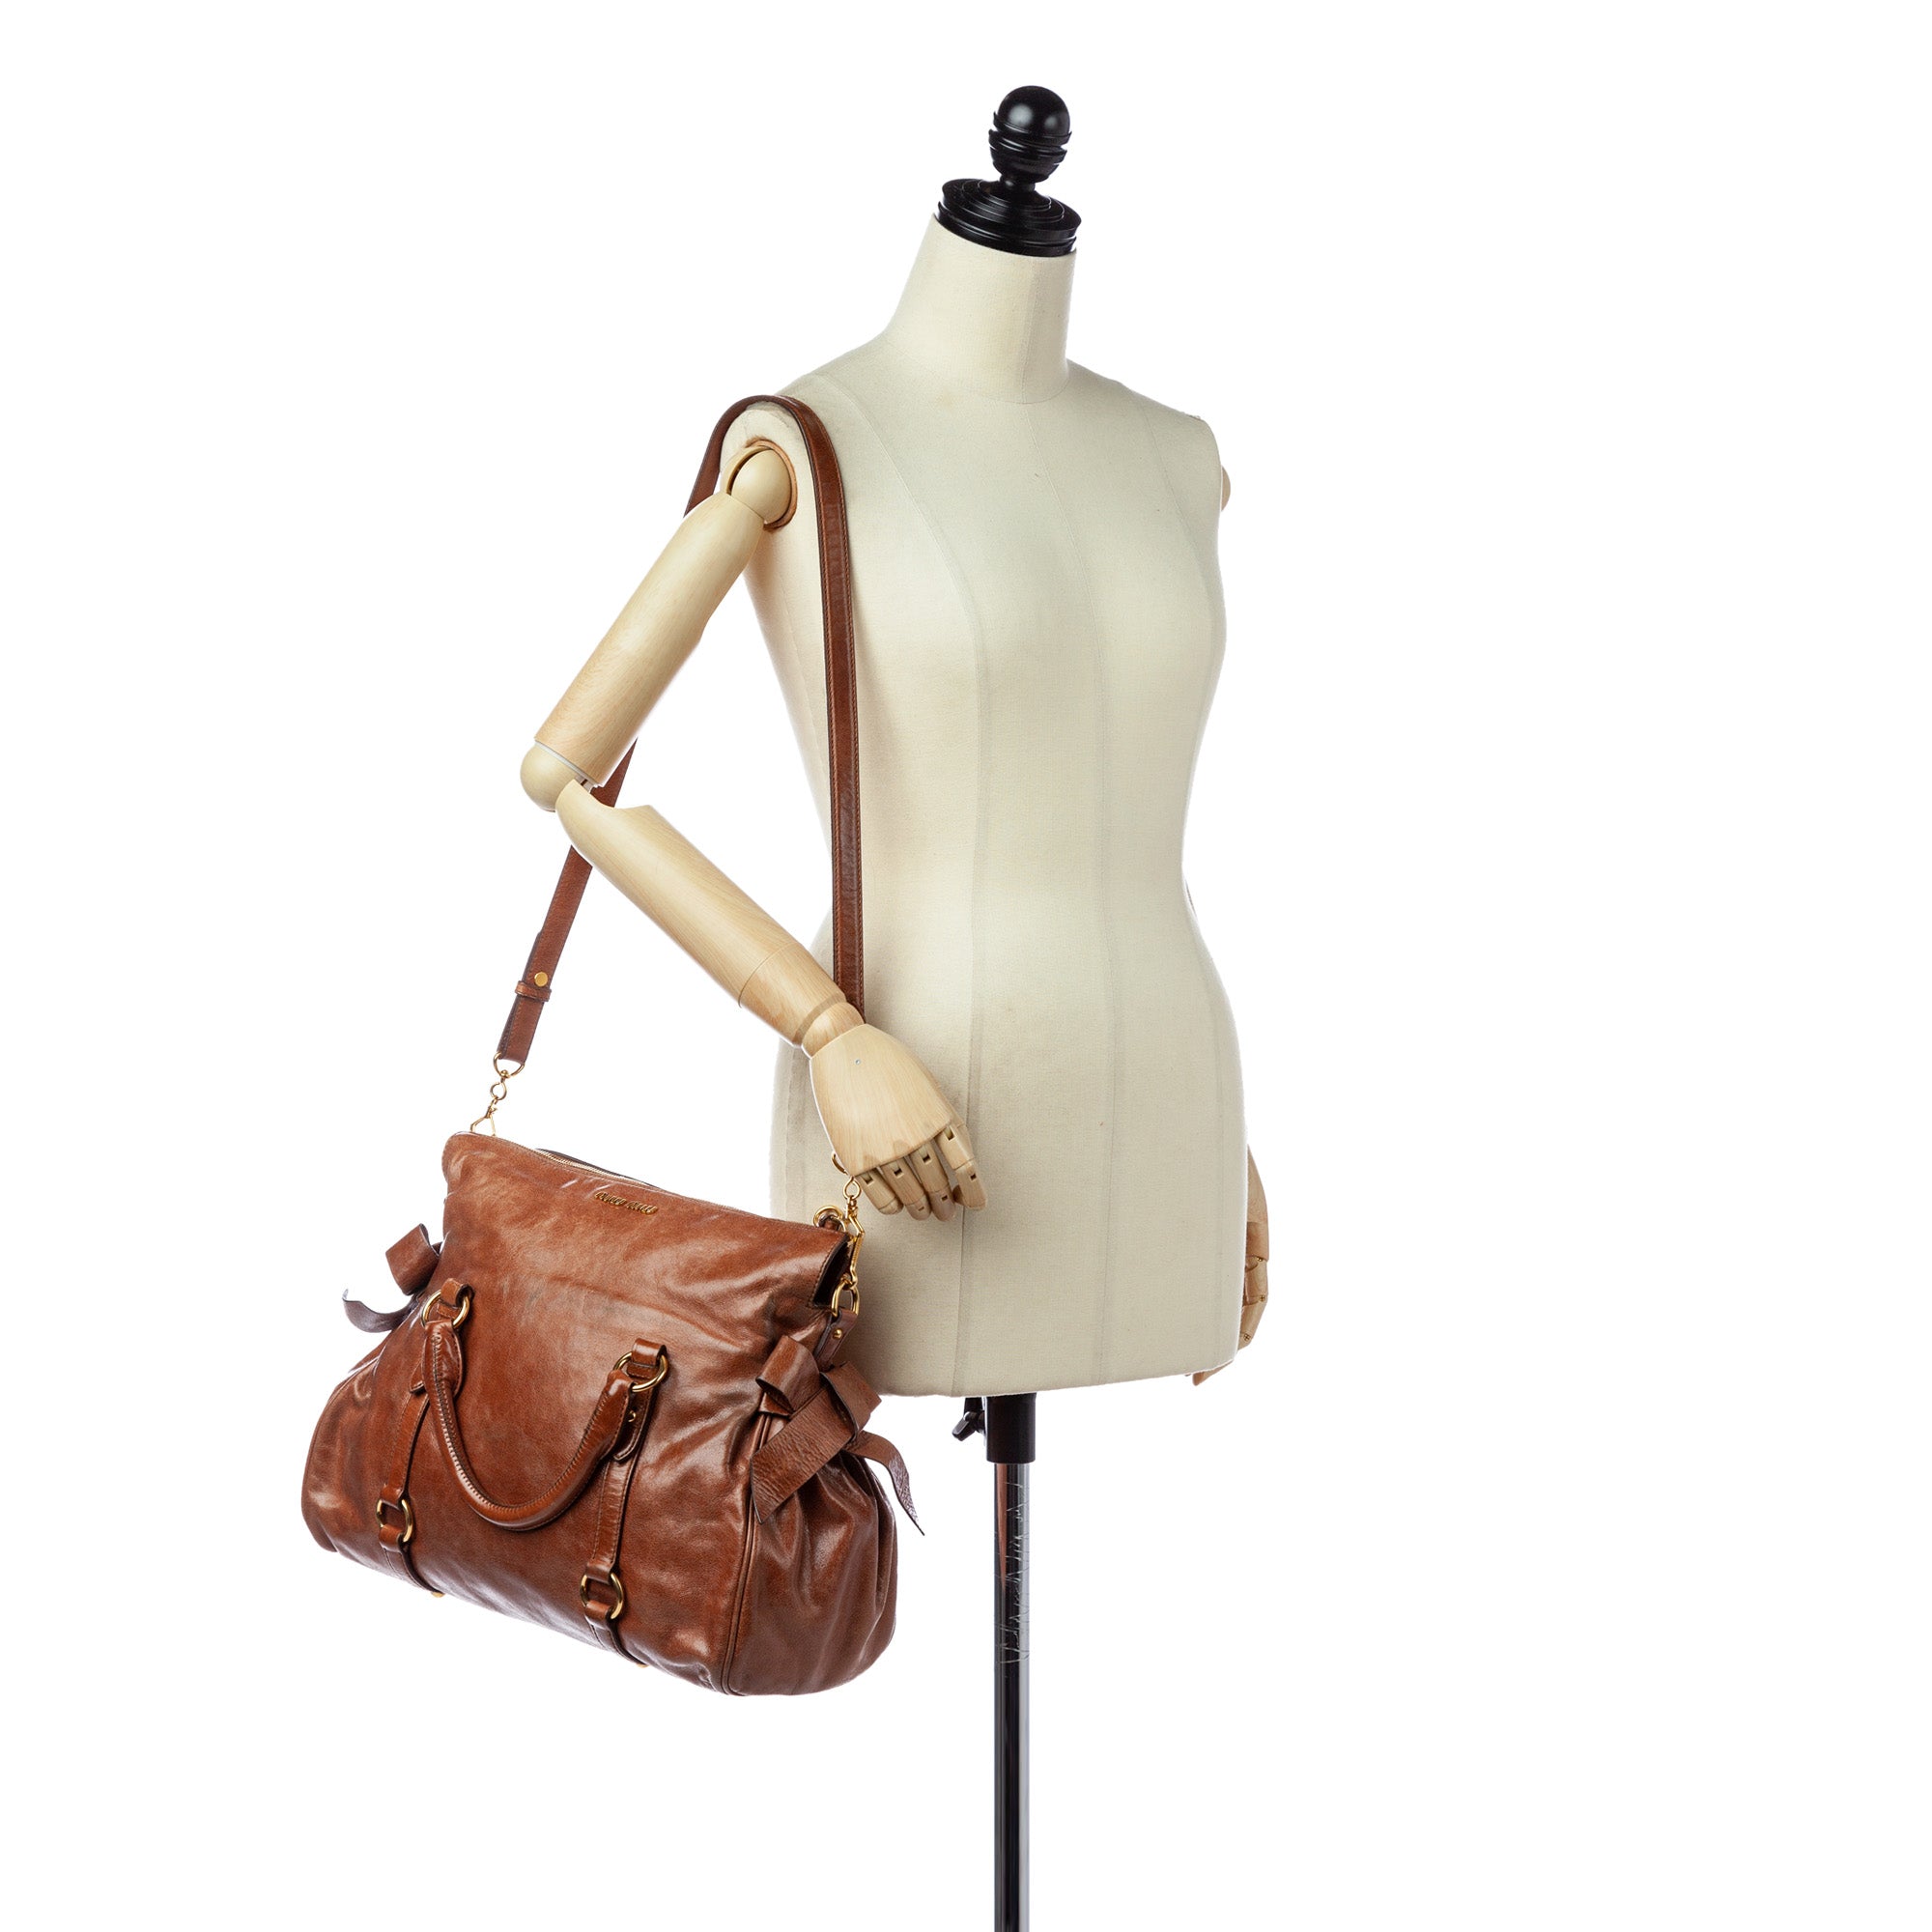 Brown Miu Miu Vitello Lux Bow Satchel Handbag – Designer Revival